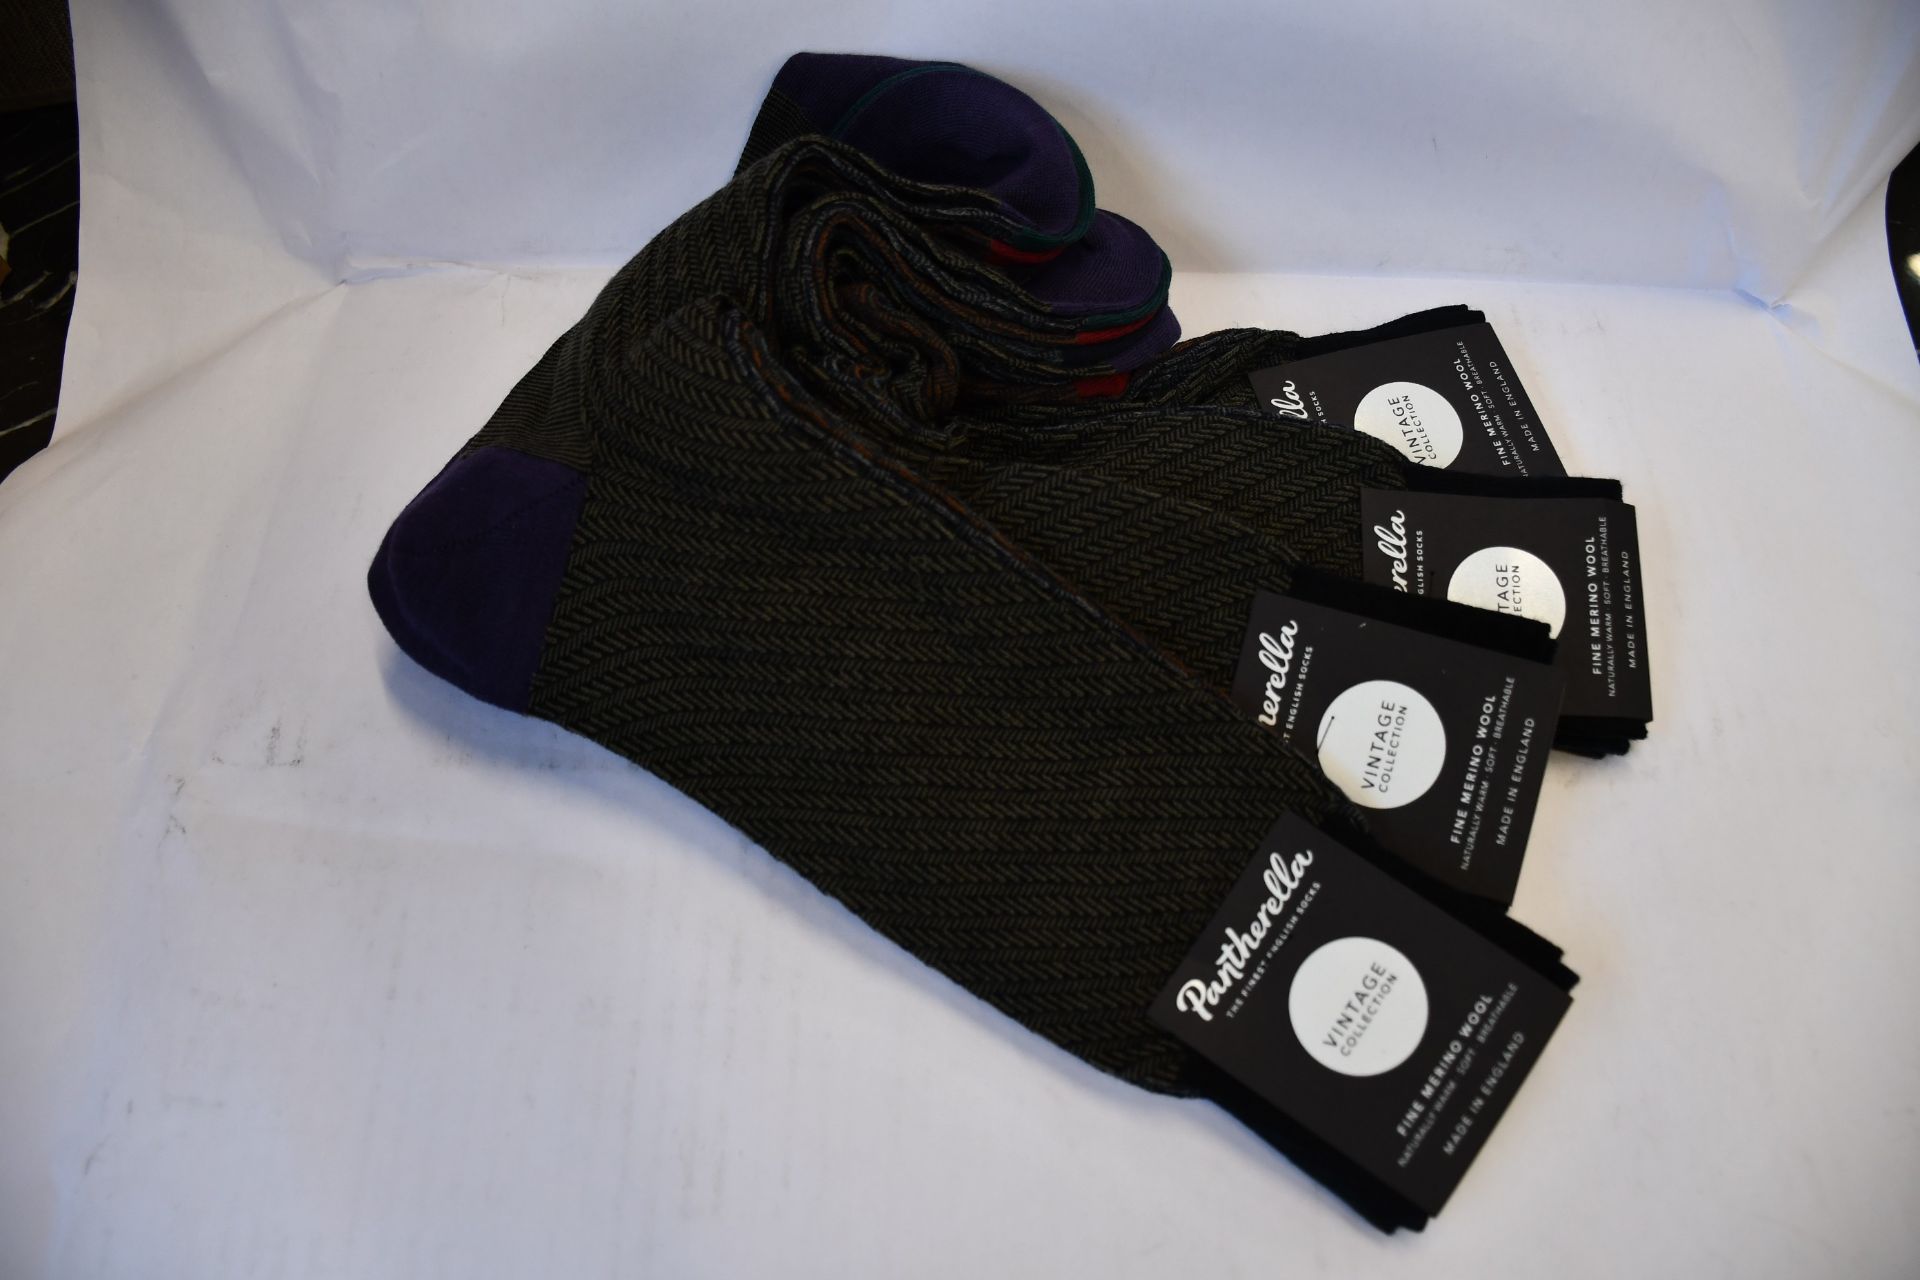 Eight pairs of as new Pantherella Dagnall fine merino wool socks.